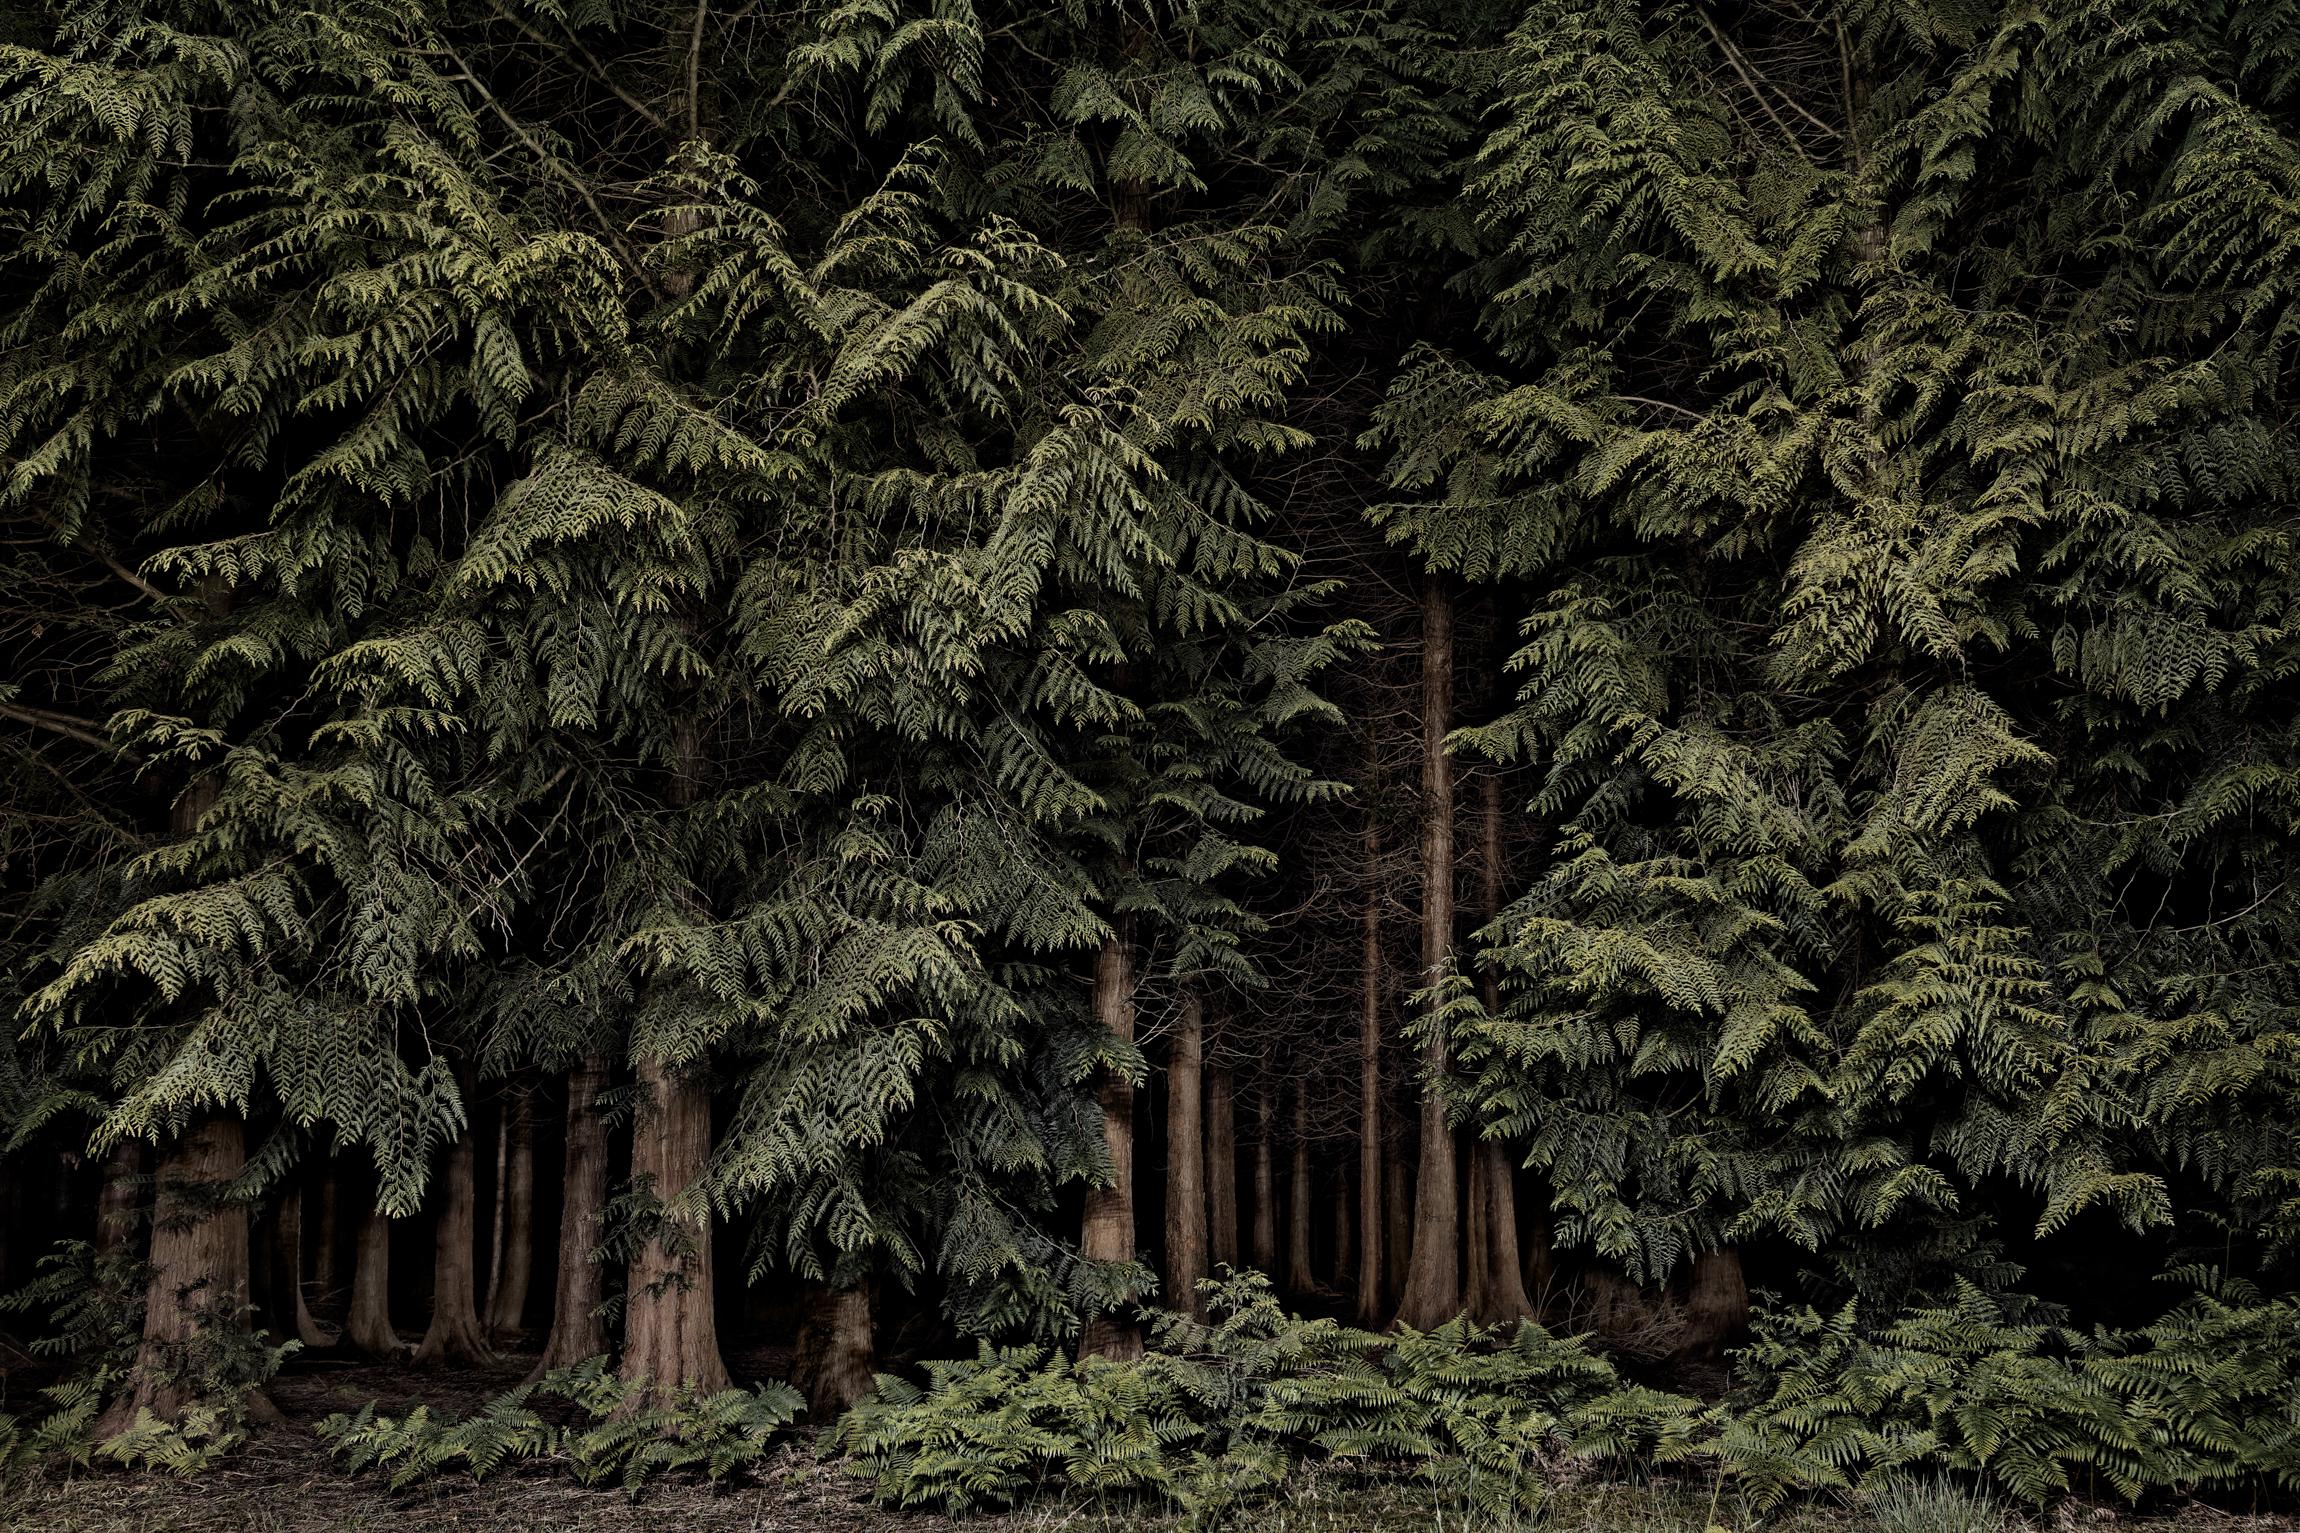 Jasper Goodall Landscape Photograph - Cedars, Twilight's Pat 001 - Forest at night...